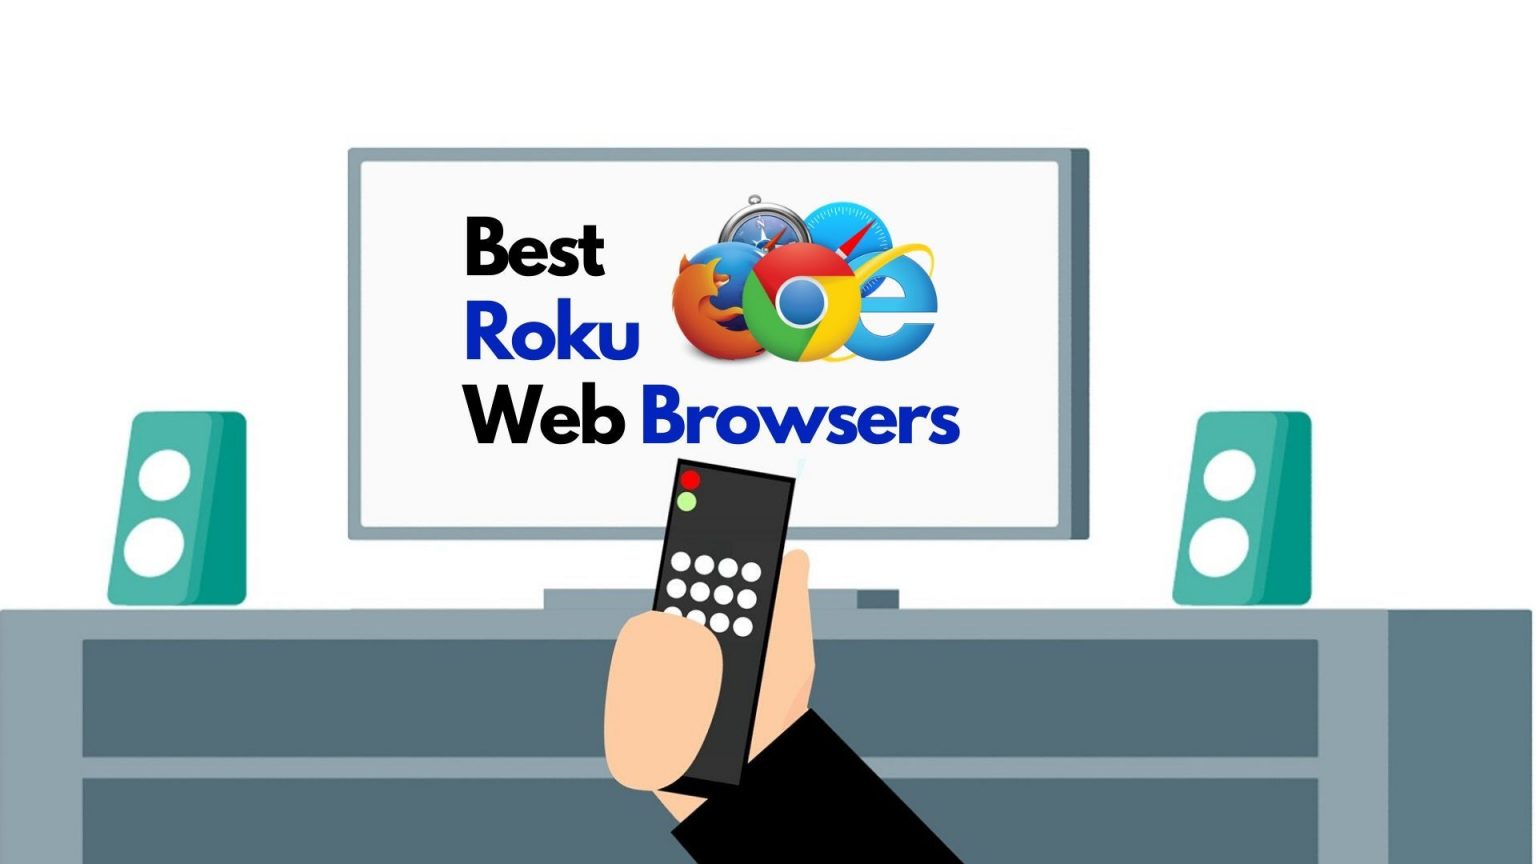 web browser app for roku